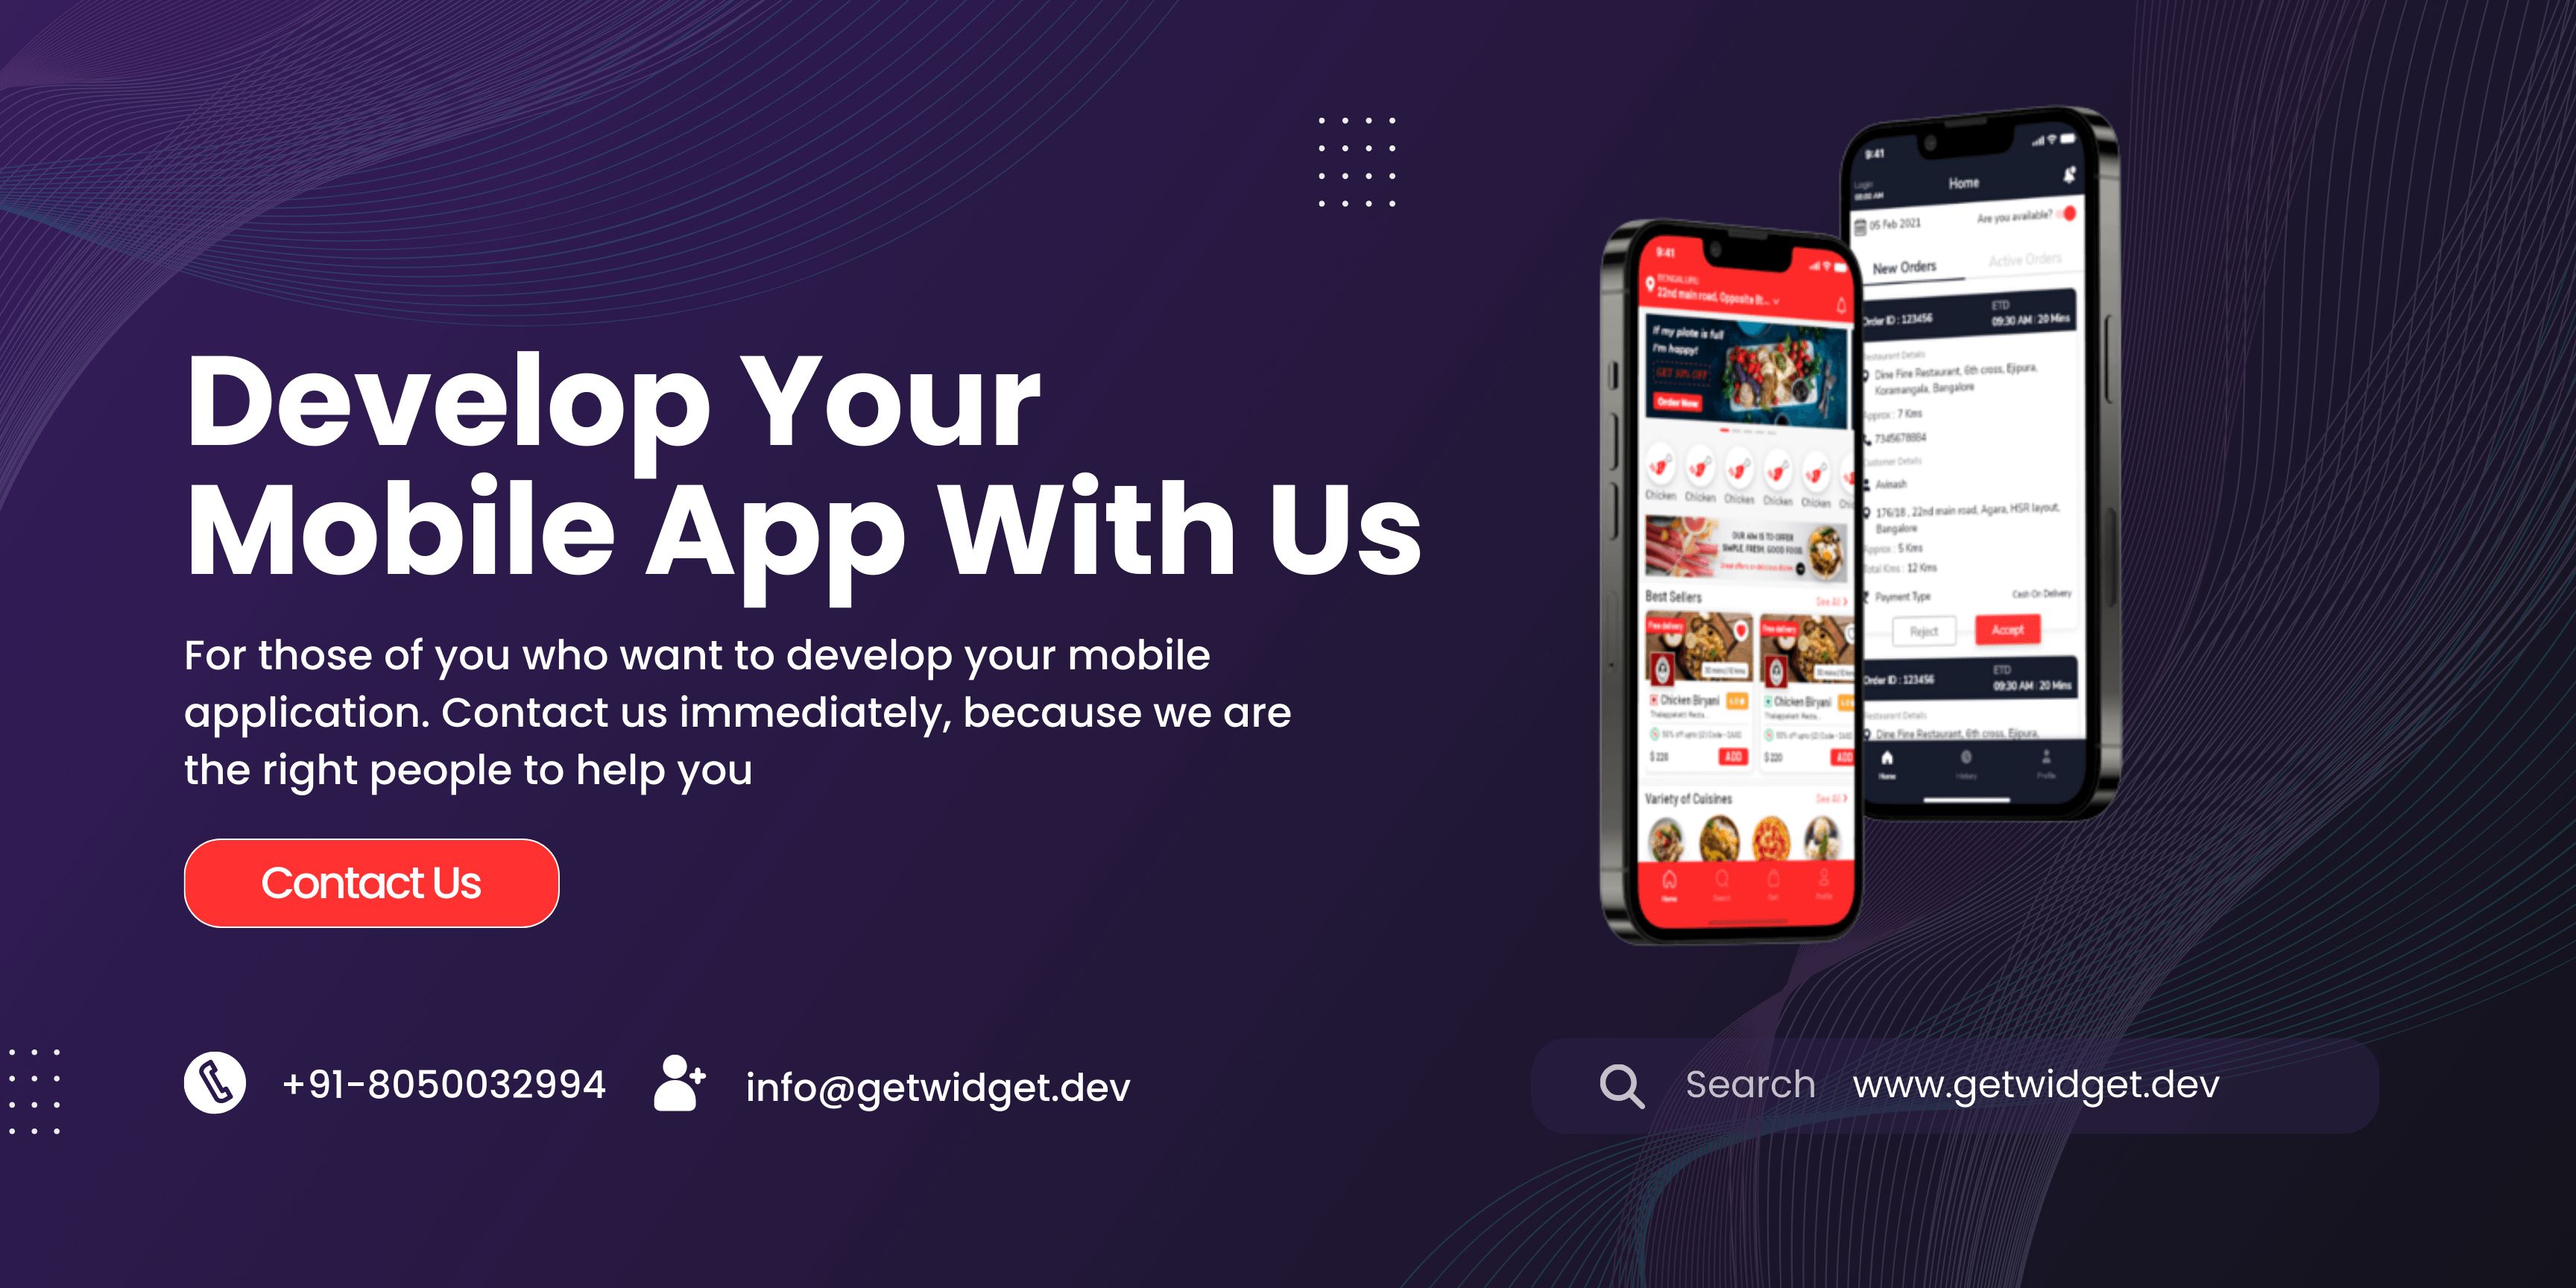 GetWidget Mobile App Development Company